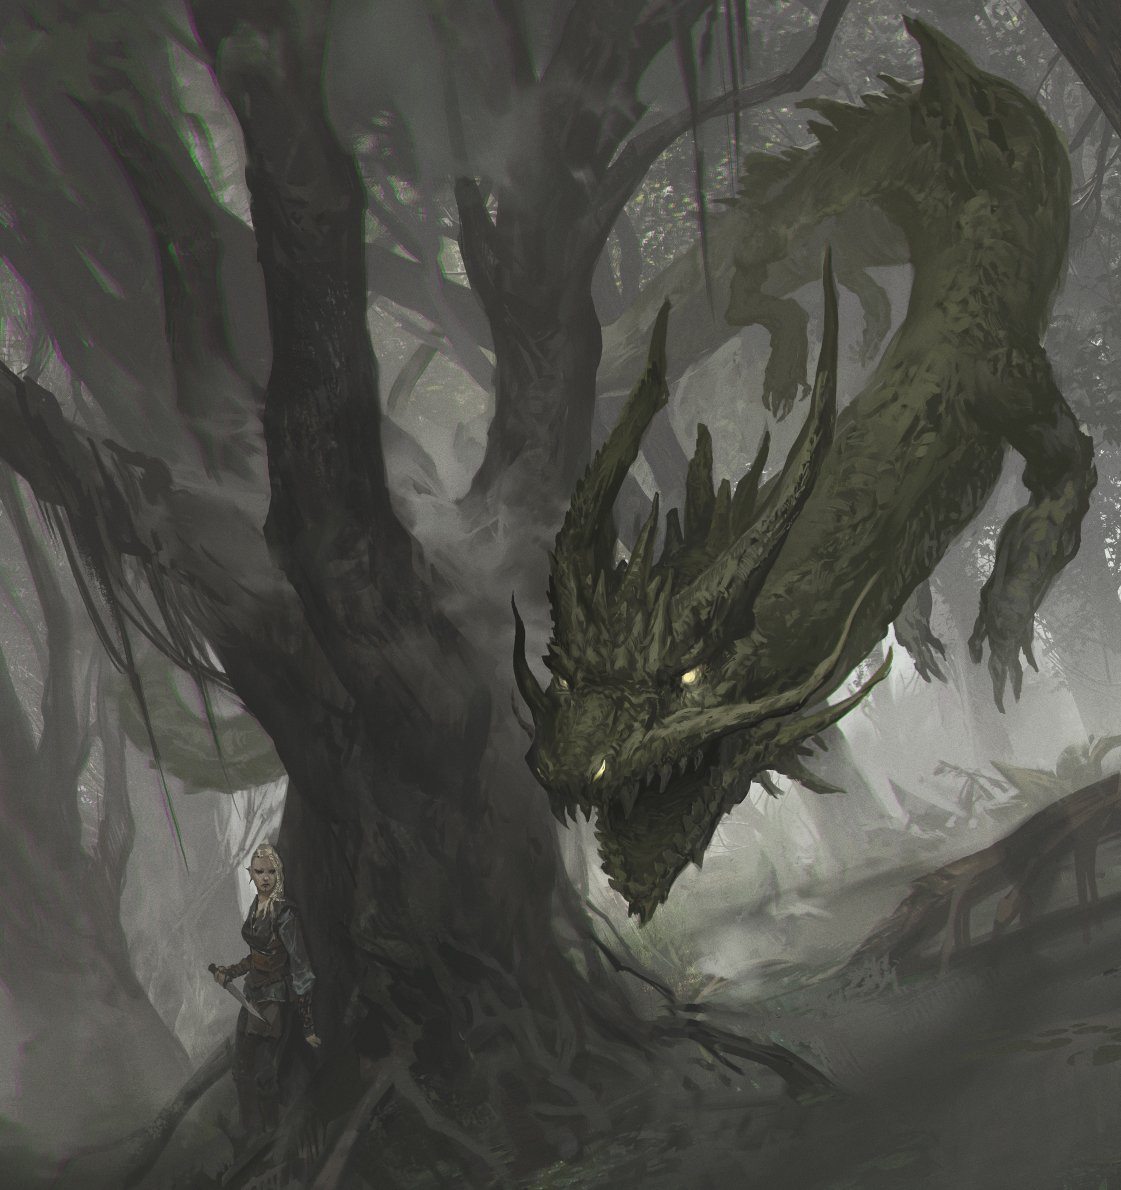 mythical swamp dragons